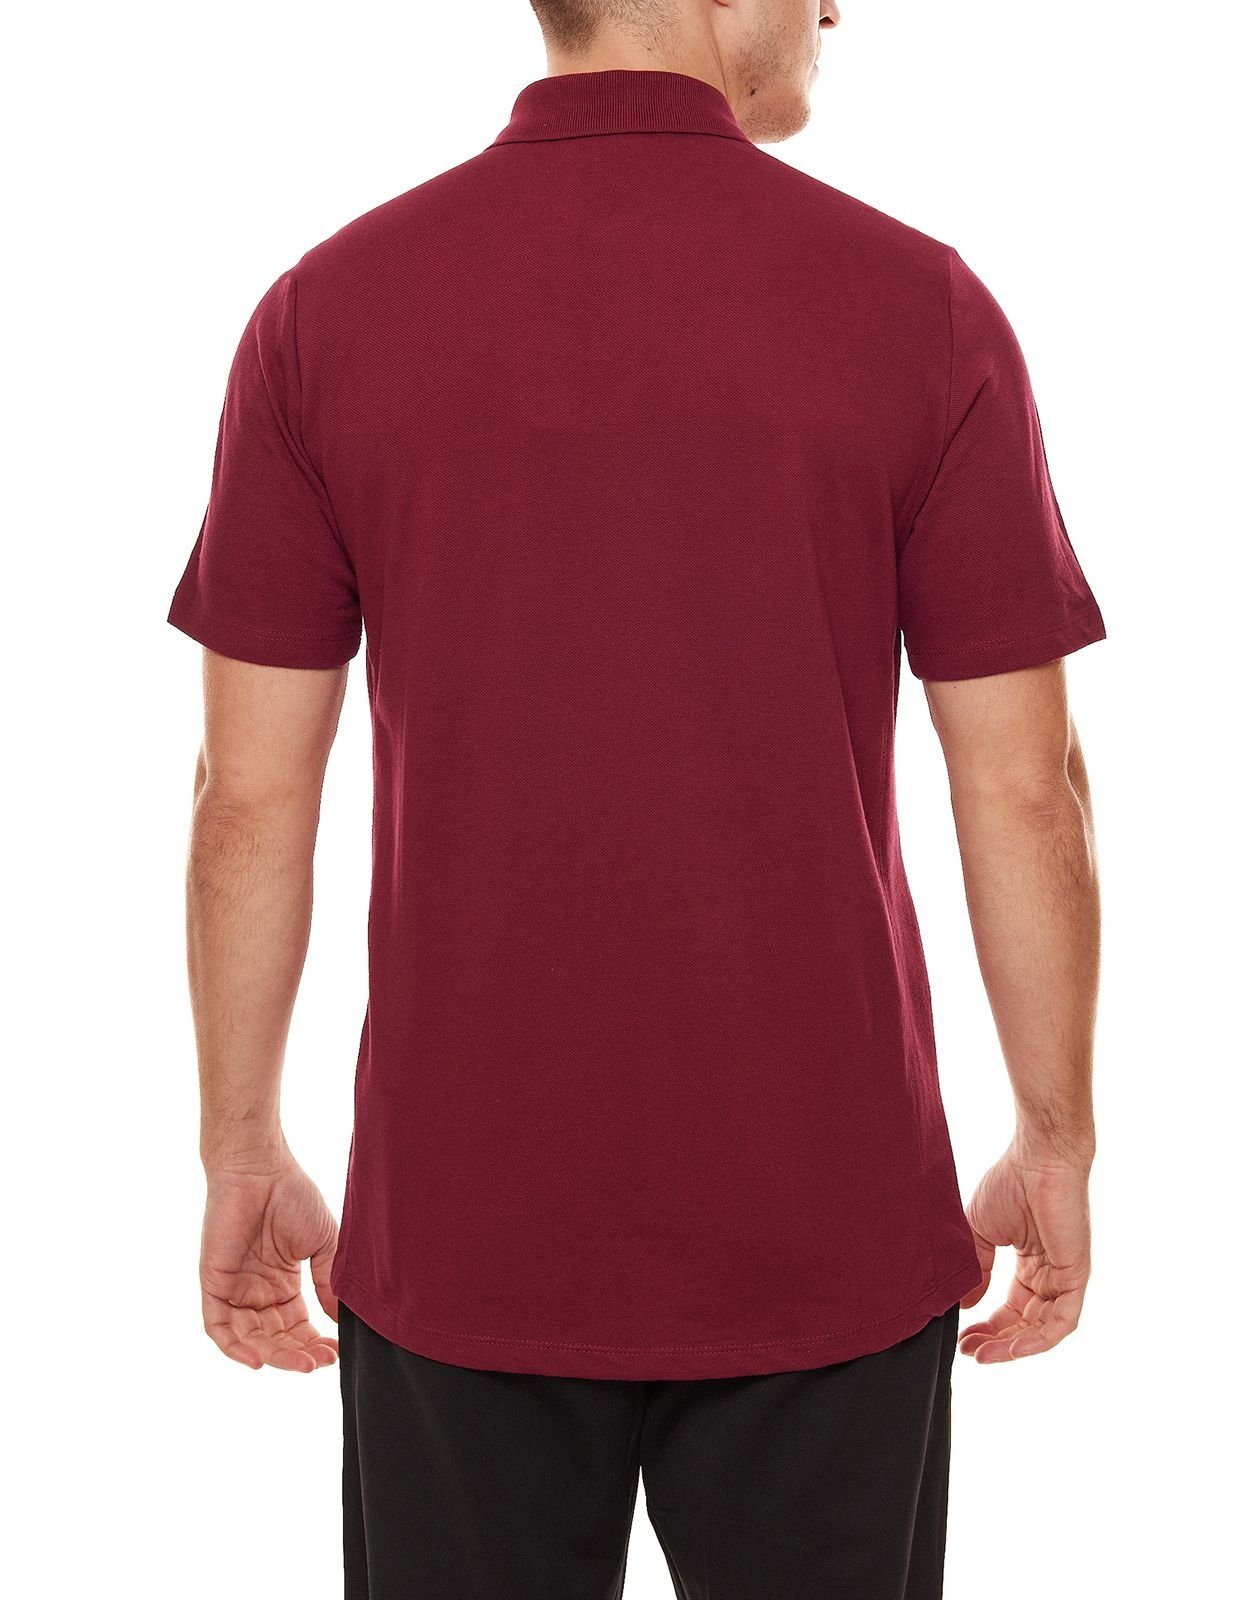 zeitloses Golf-Shirt Rundhalsshirt Polohemd Bordeaux Umbro Herren umbro UMTM0323-6JY Essential Polo-Shirt Club